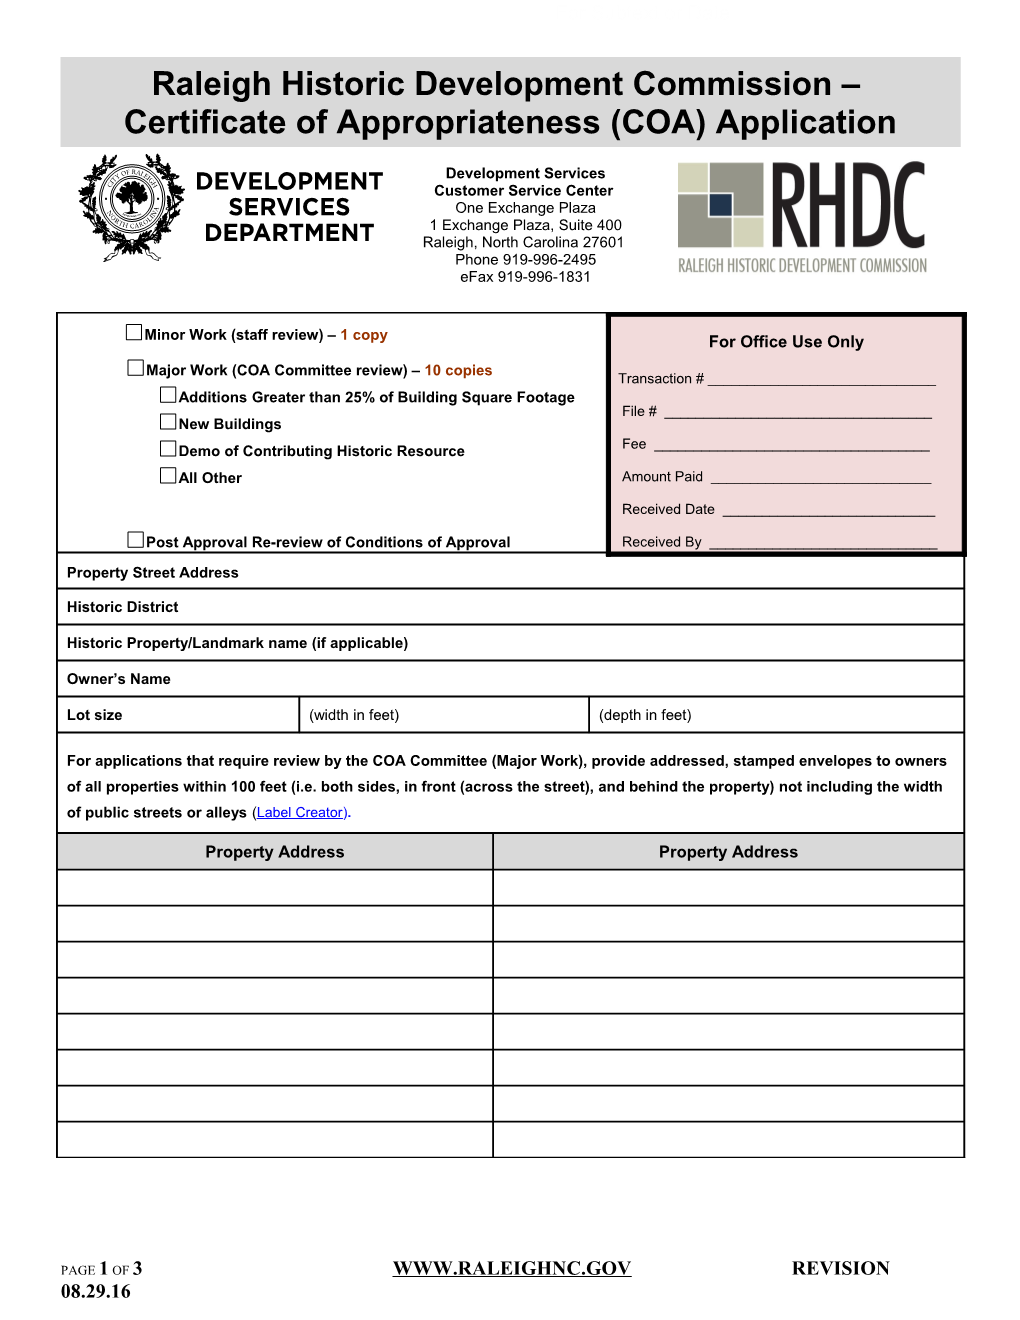 RHDC Certificate of Appropriateness Application